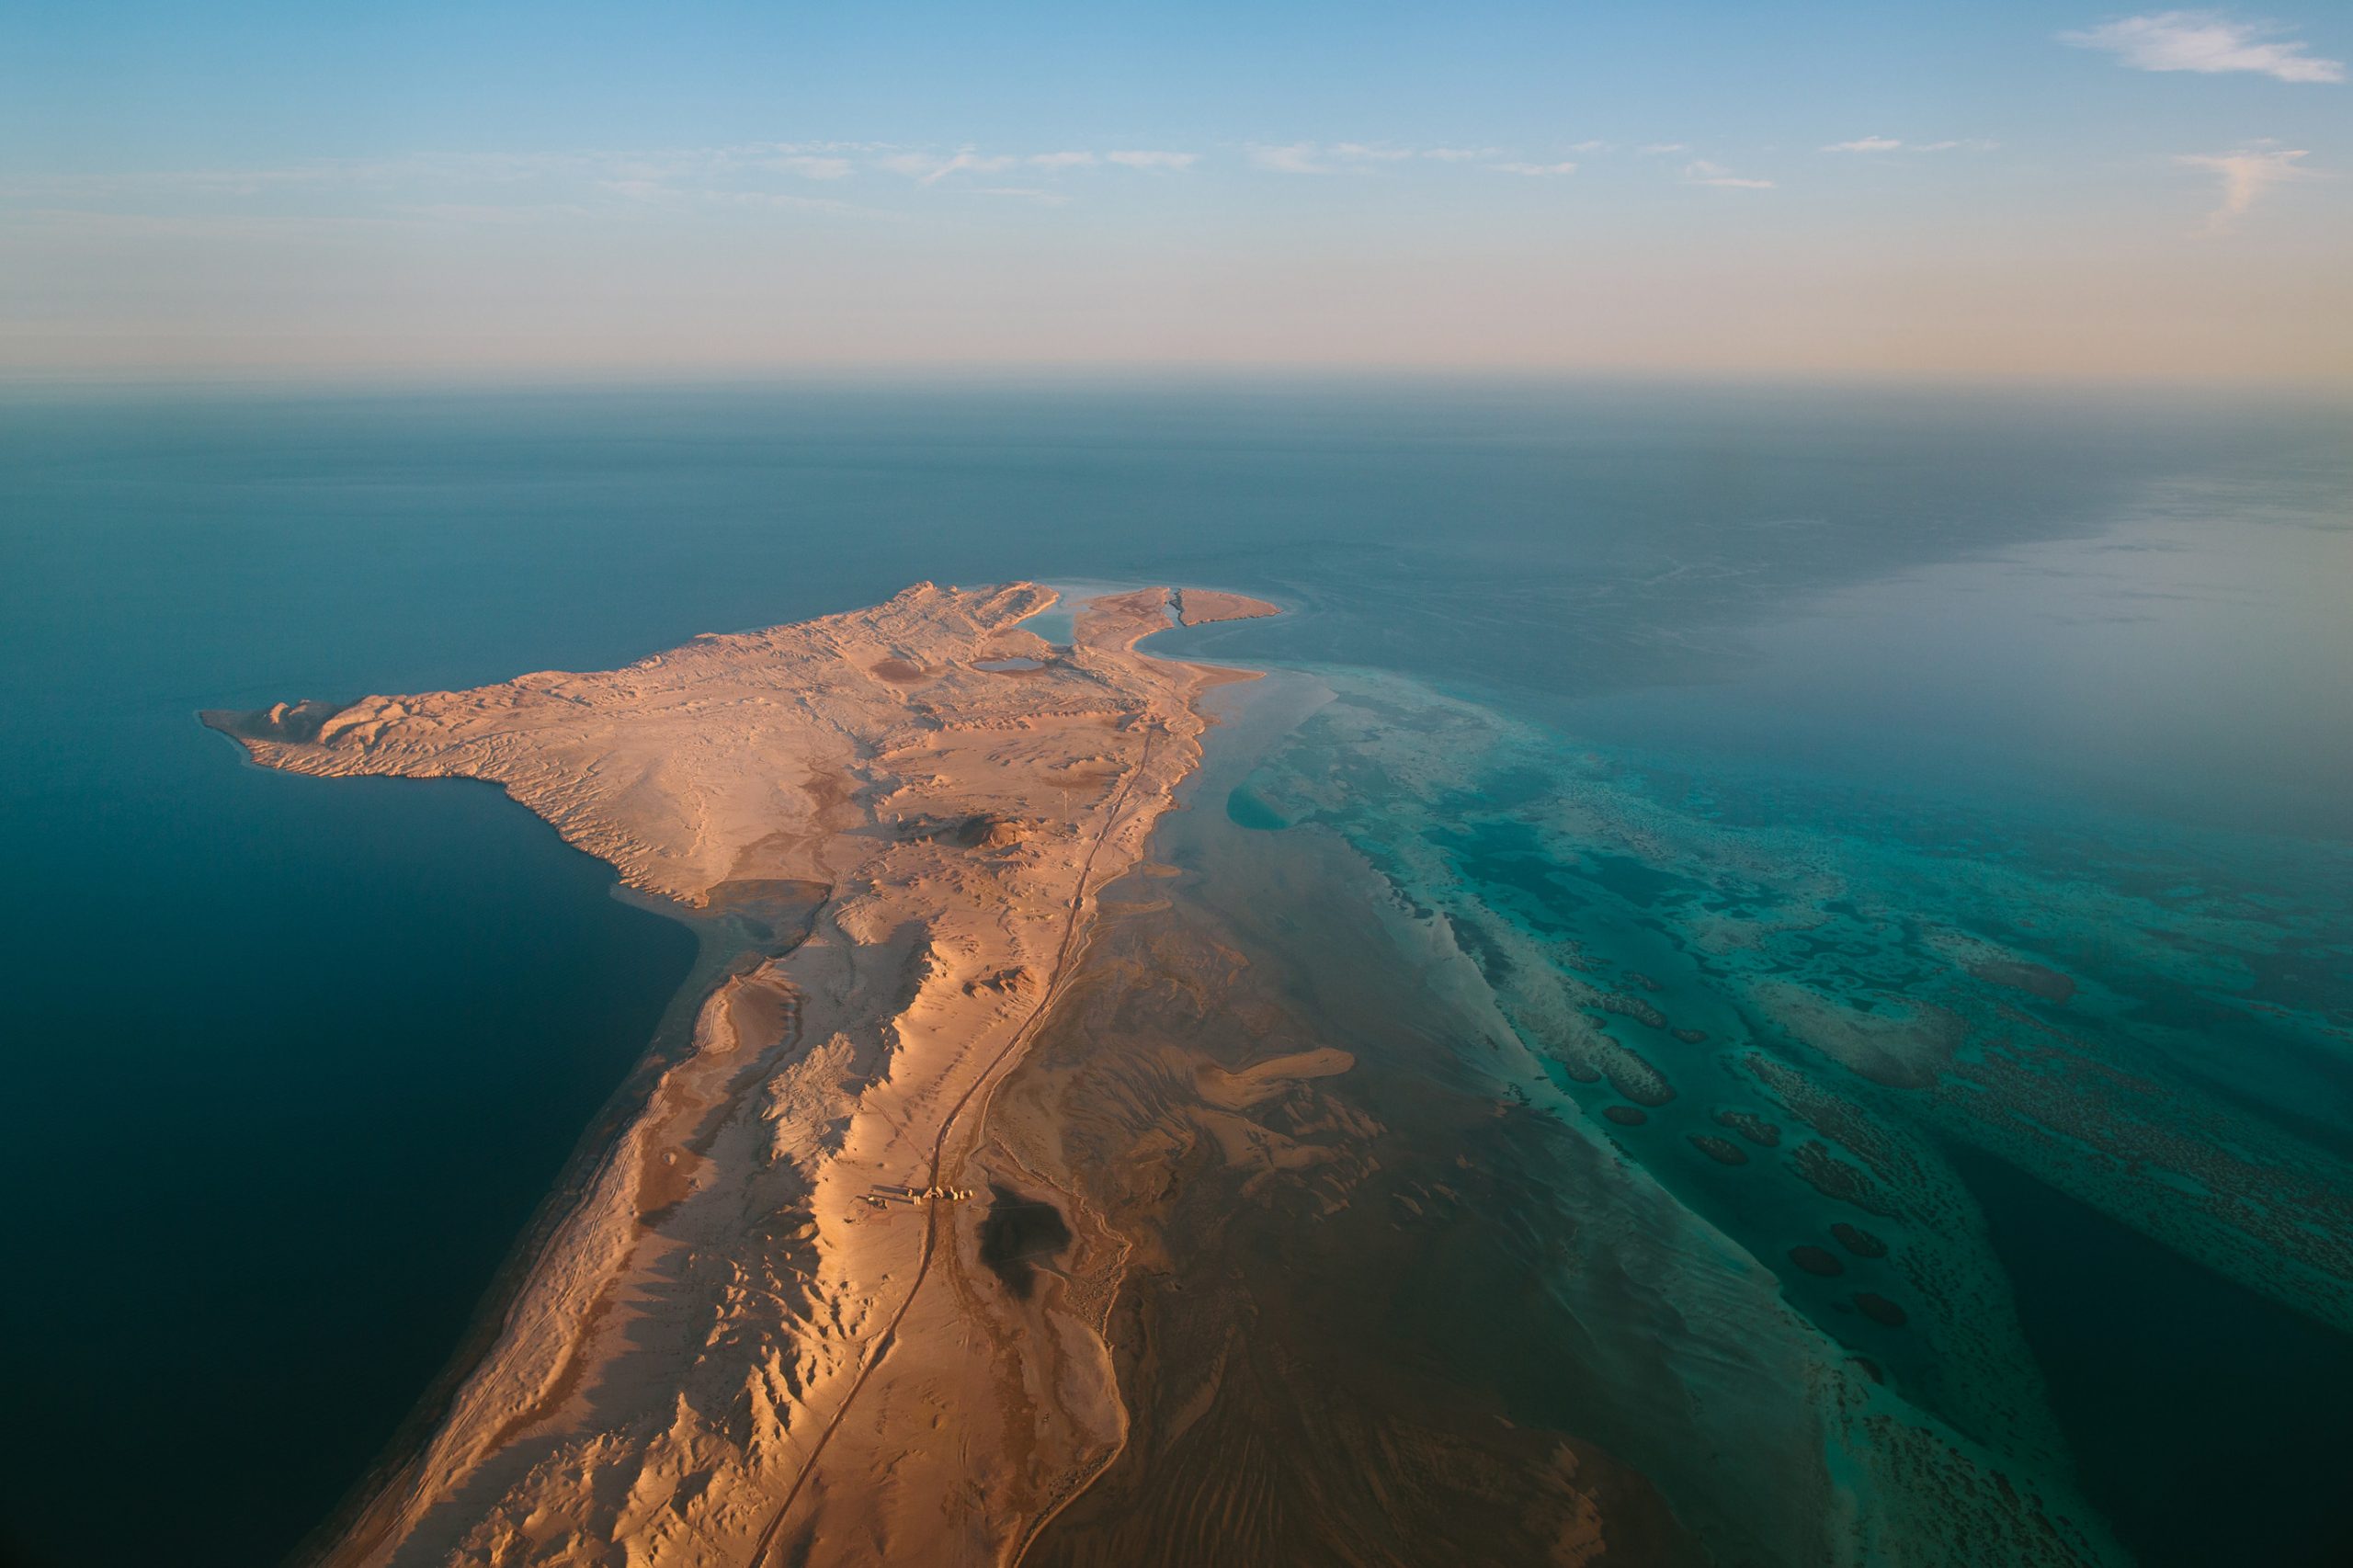 Parco nazionale di Ras Mohammed Egitto ©Shutterstock